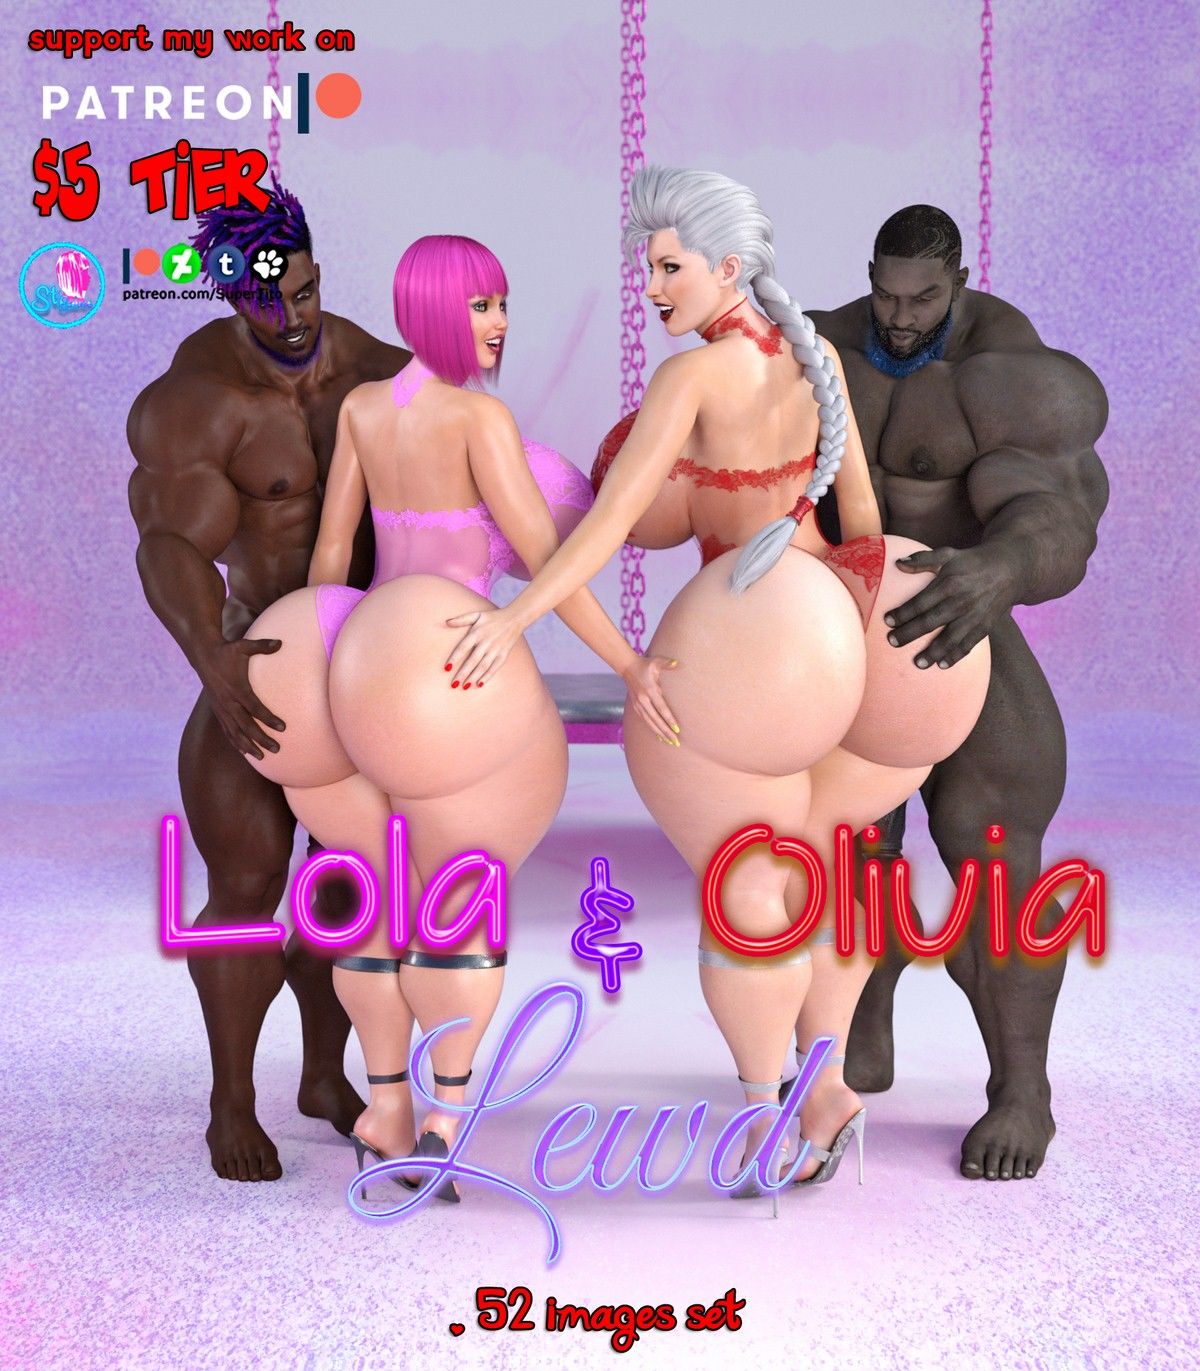 Lola & Olivia Lewd - SuperTito page 1